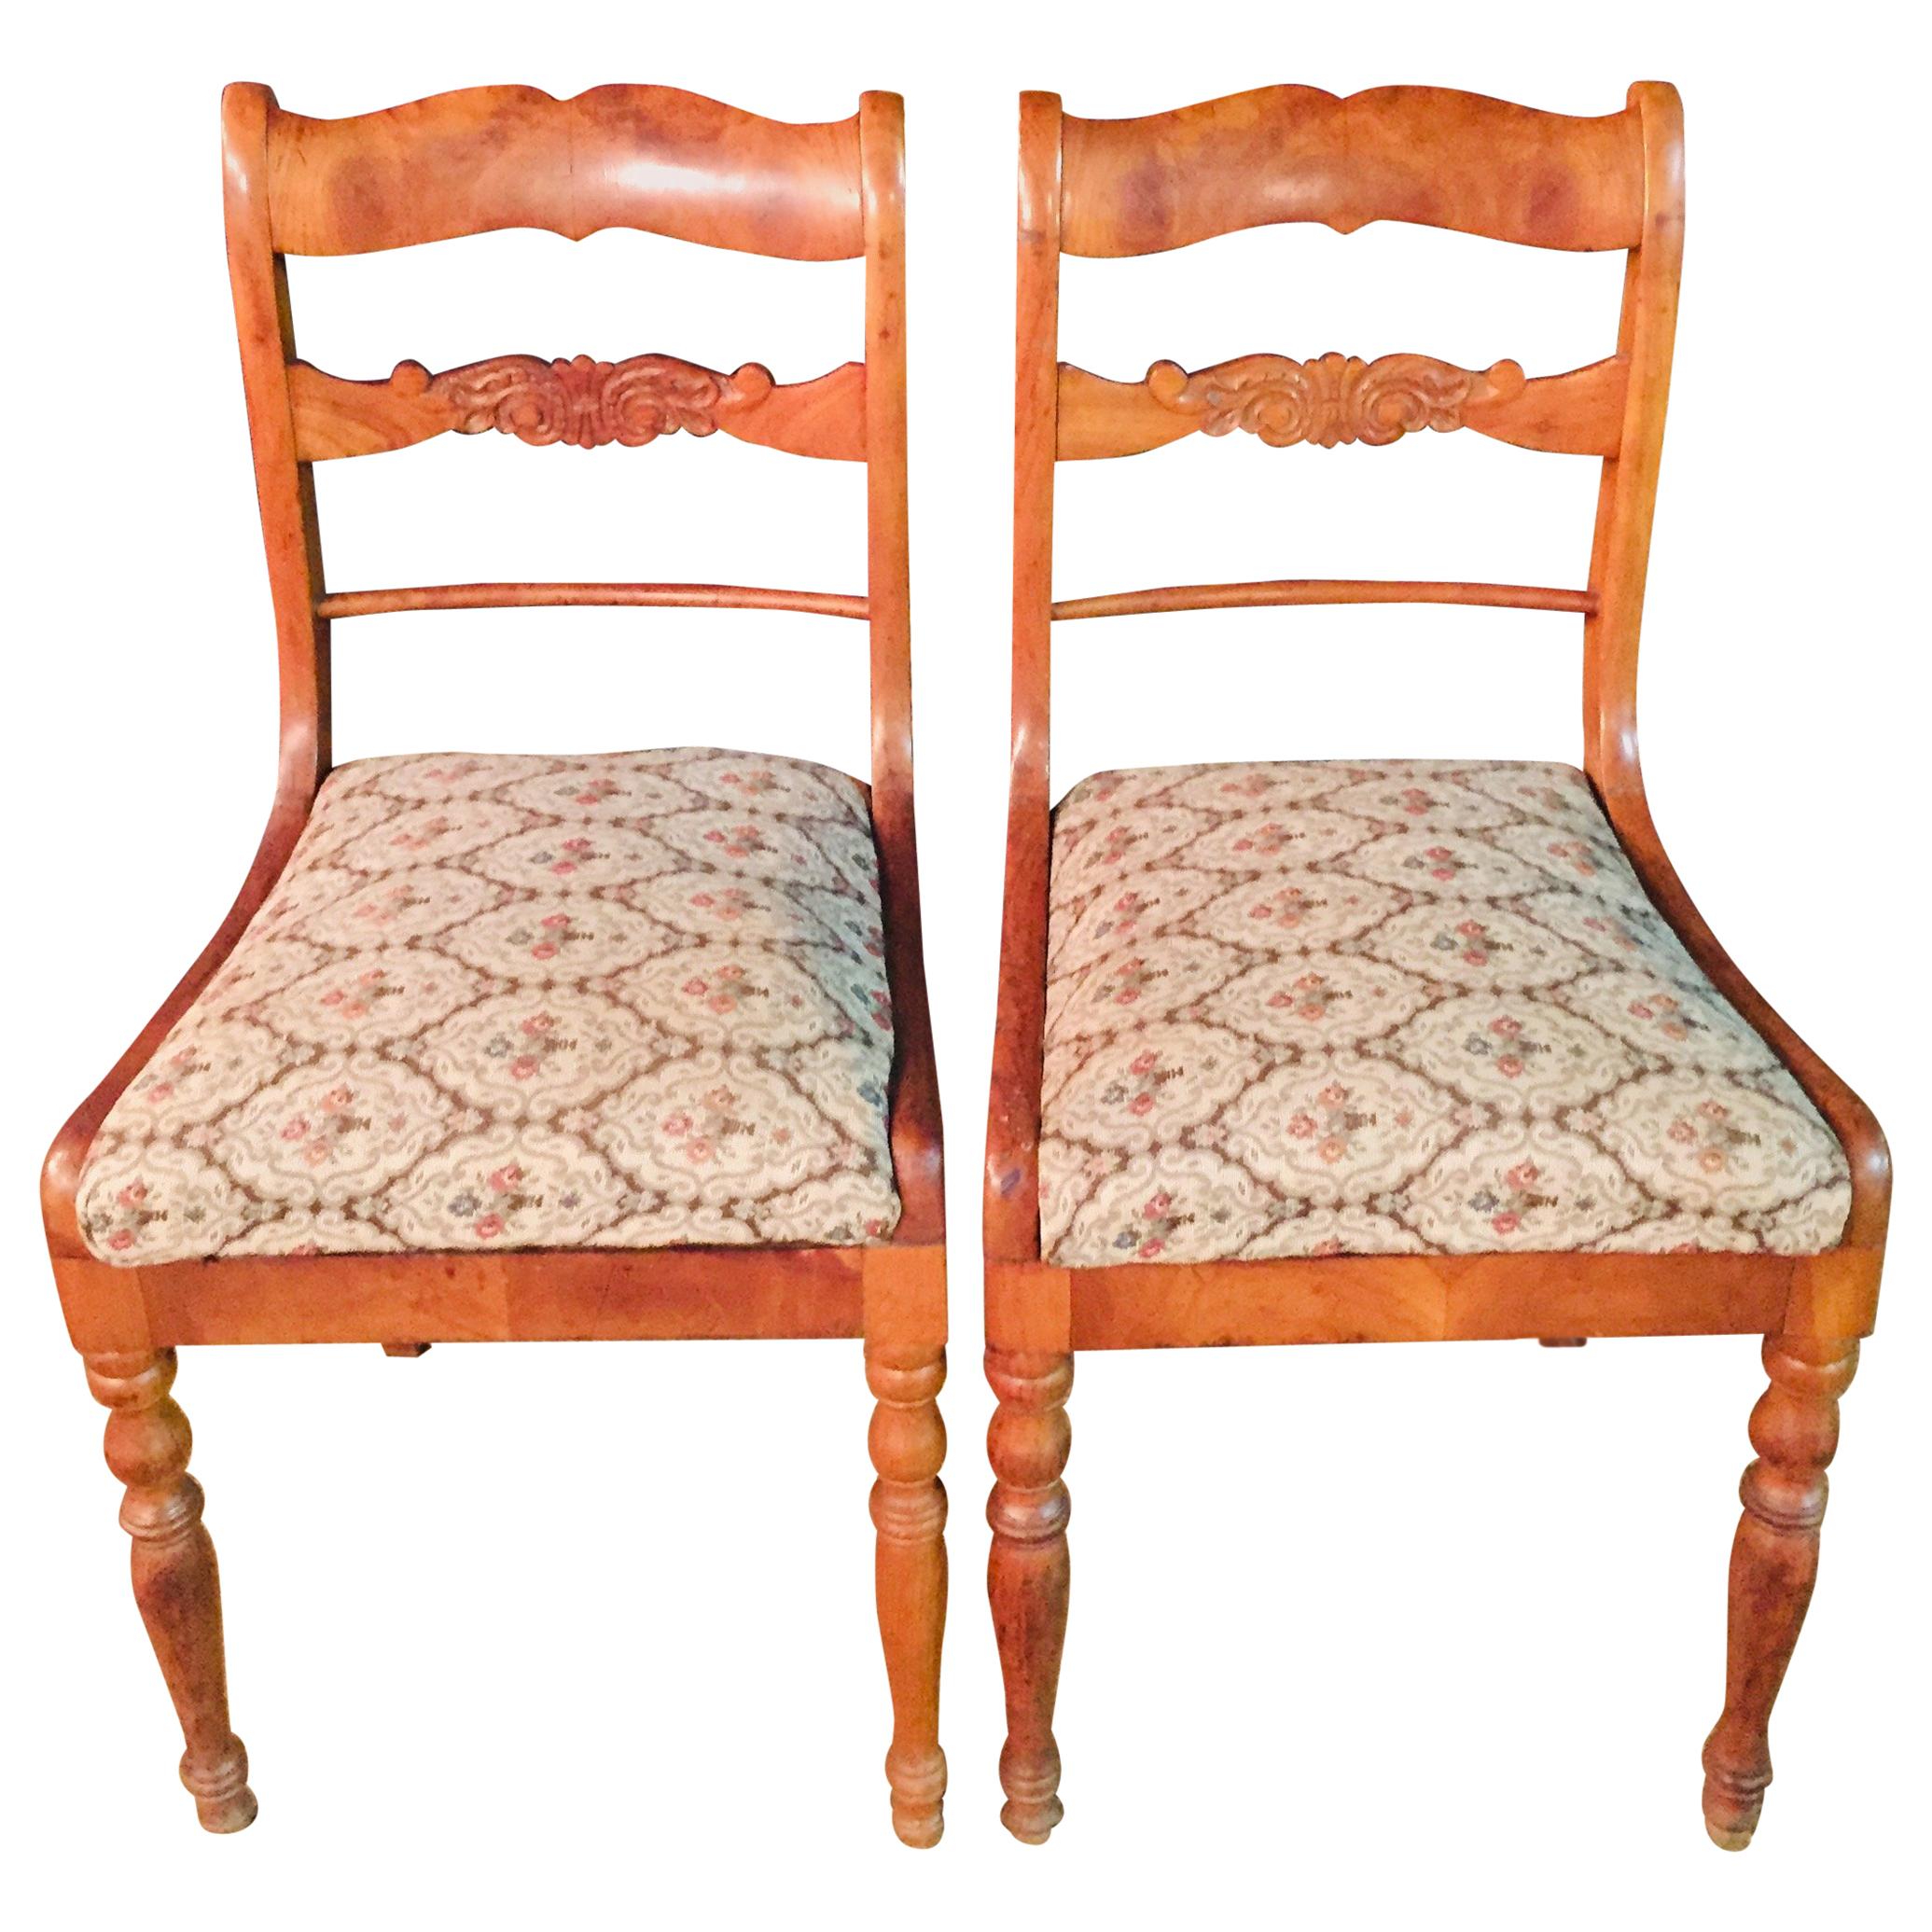 Pair of two Interesting antique Biedermeier Chairs circa 1840 cherry veneer